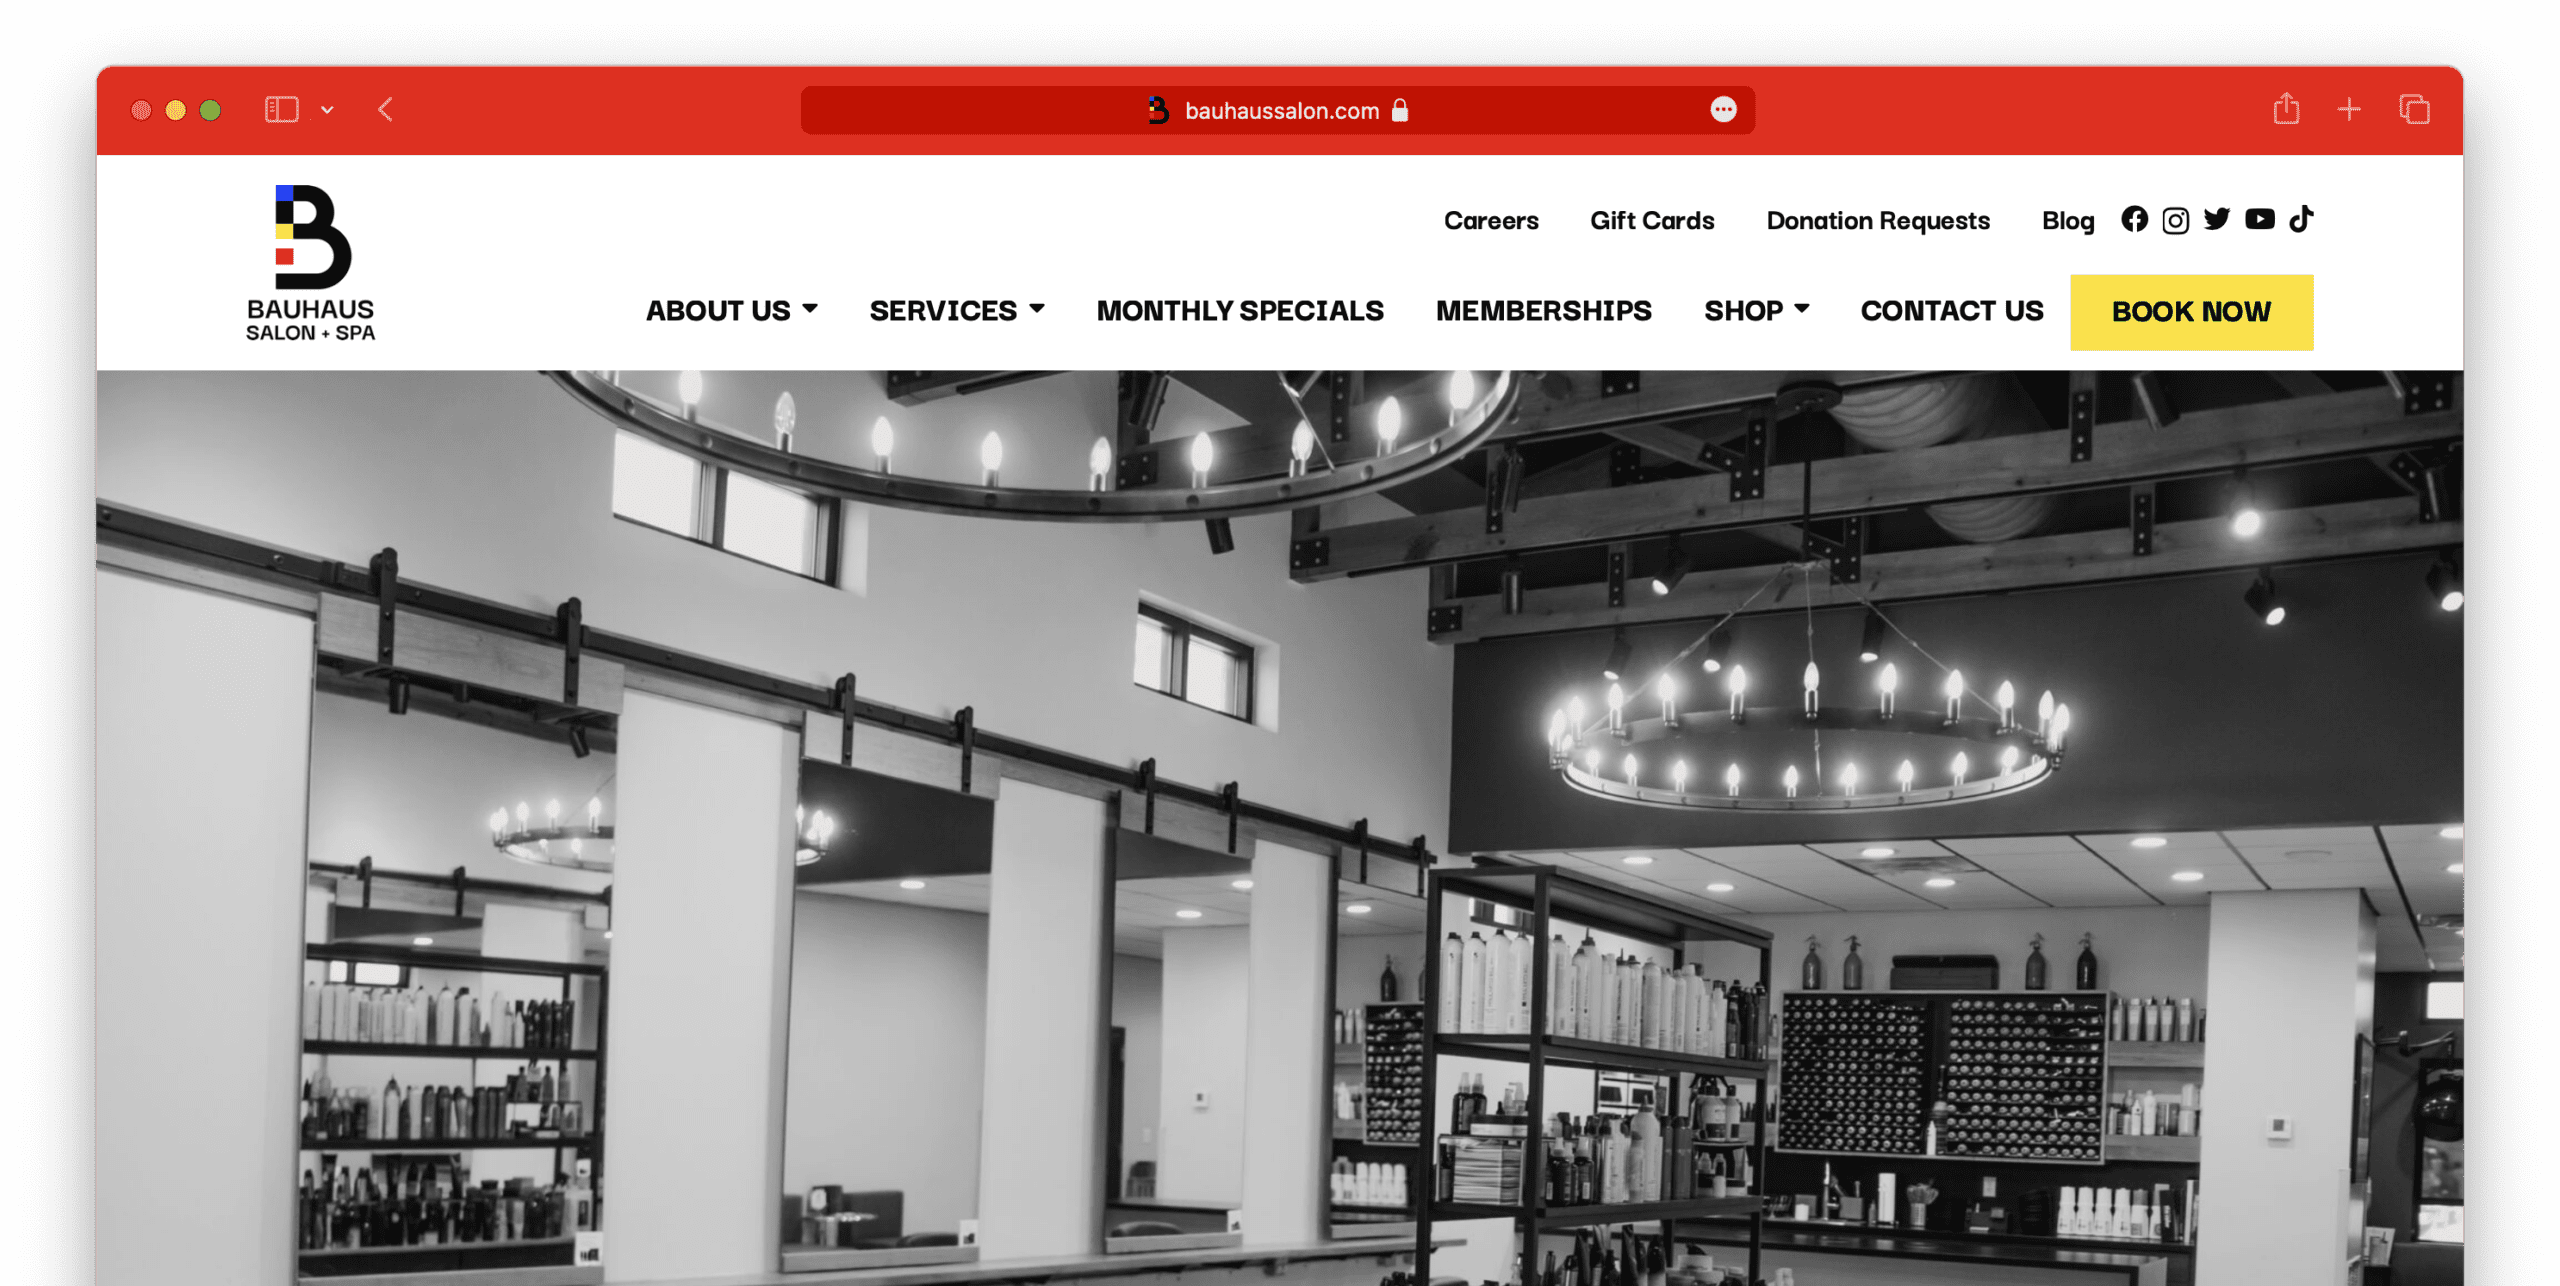 Bauhaus Salon + Spa's new home page